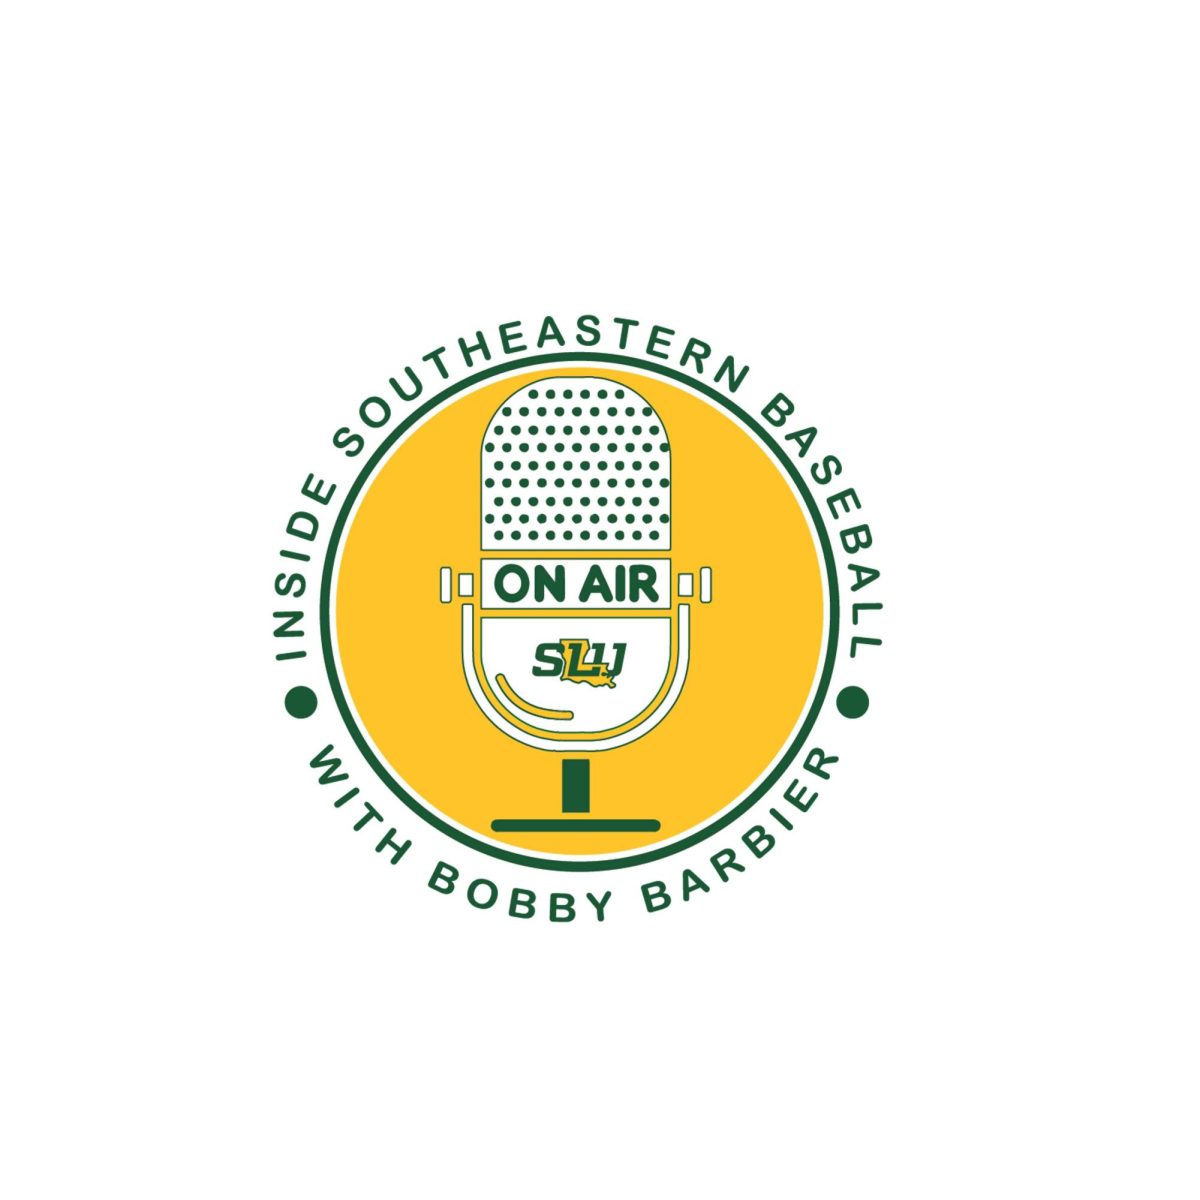 9: Inside Southeastern Baseball with Bobby Barbier - Episode 9